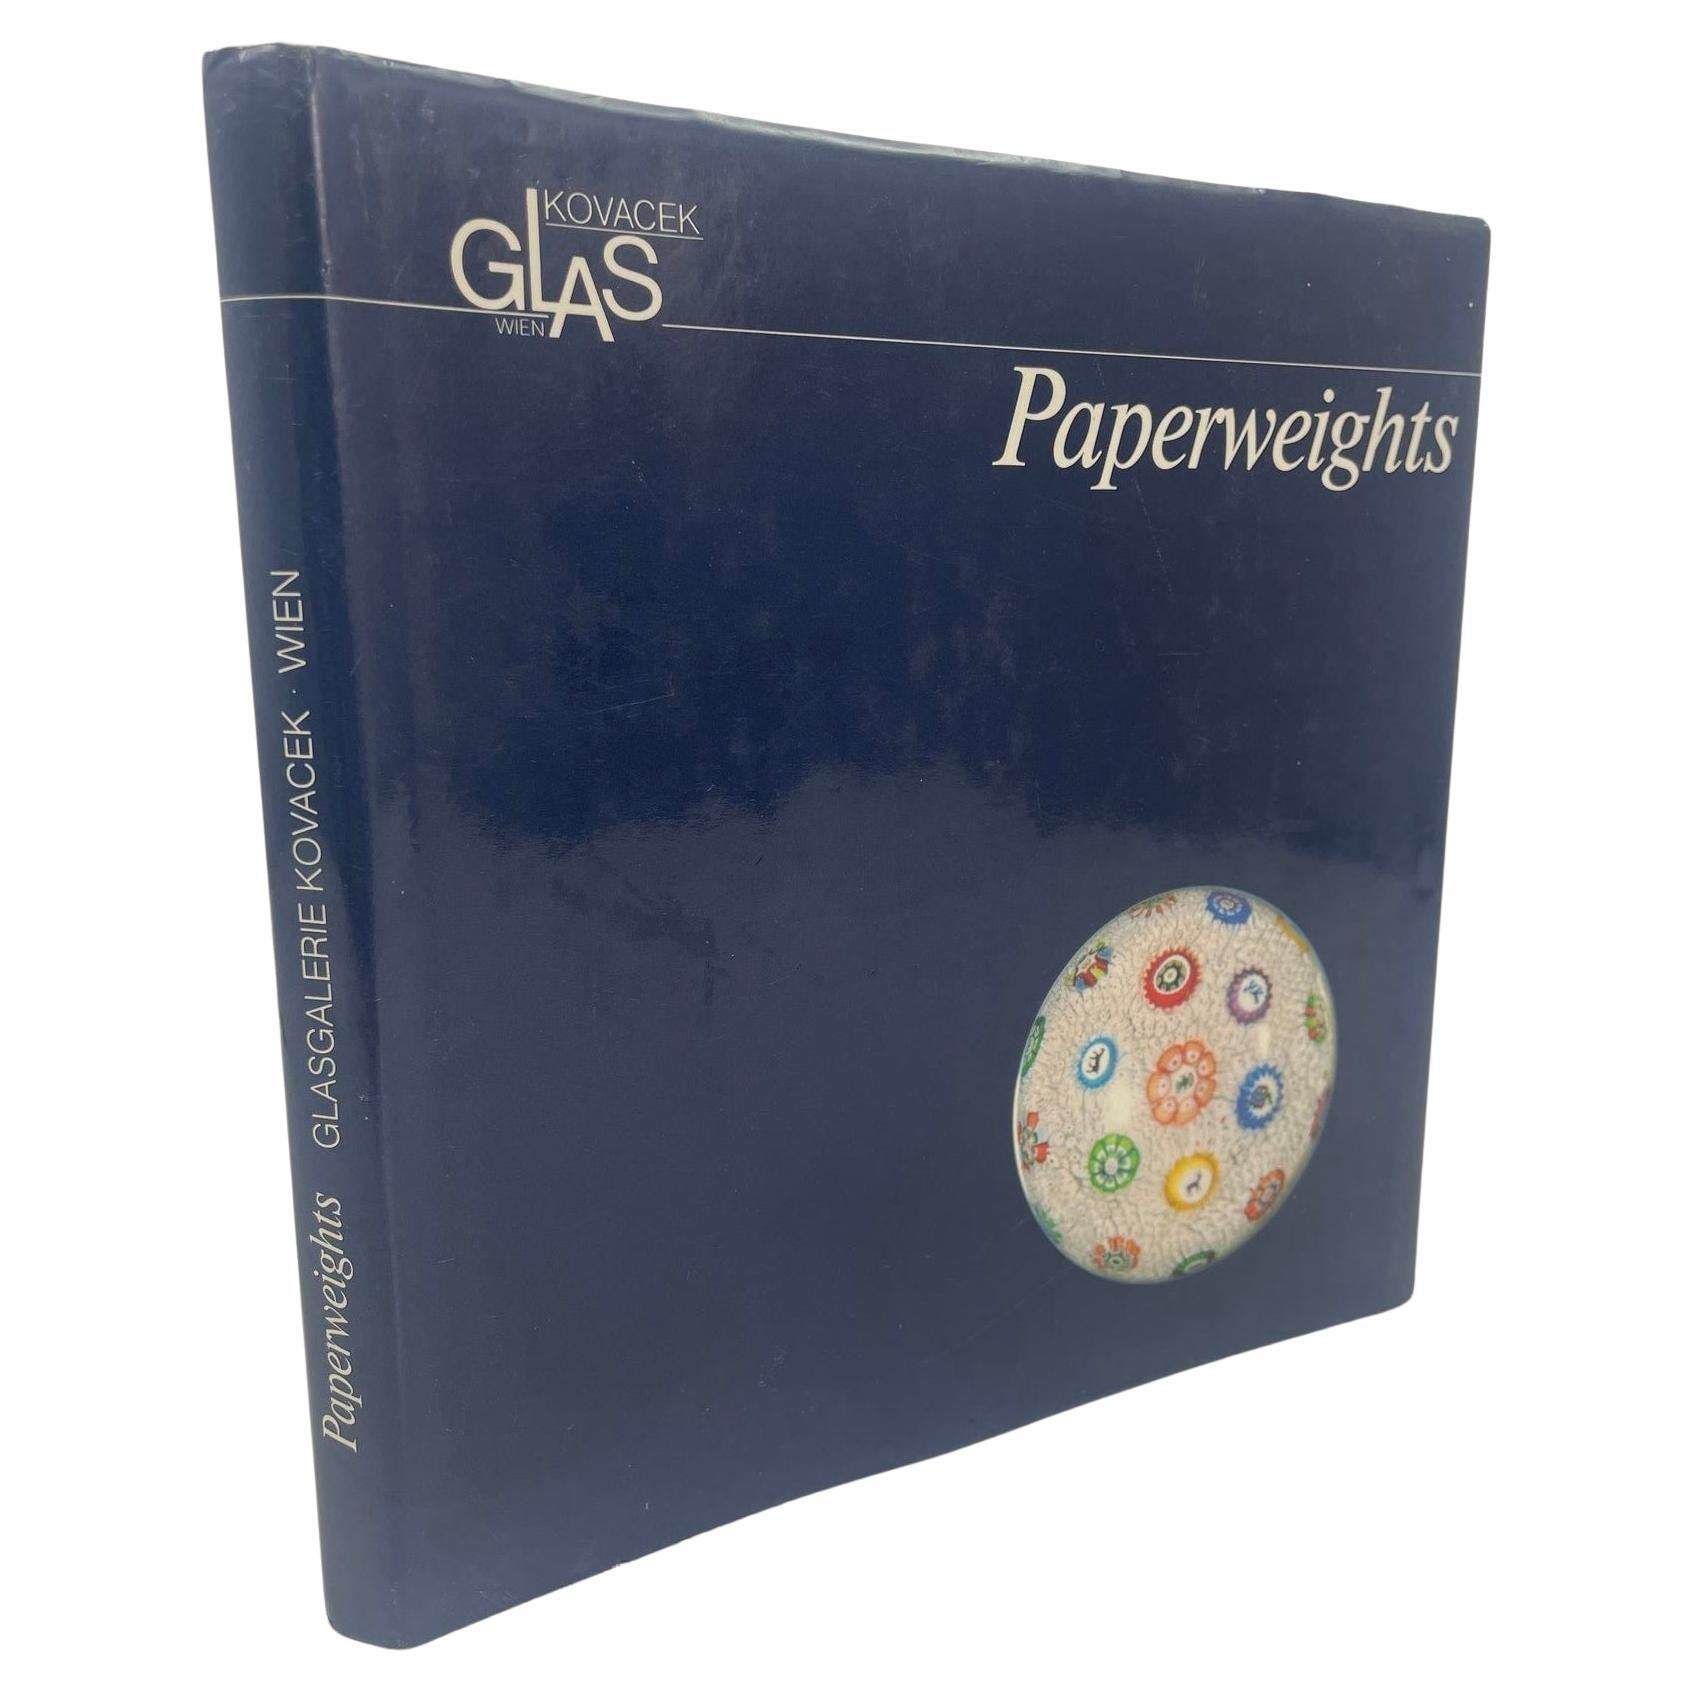 Paperweights Glasgalerie Michael Kovacek Wien 1987 Hardcover Nachschlagewerk